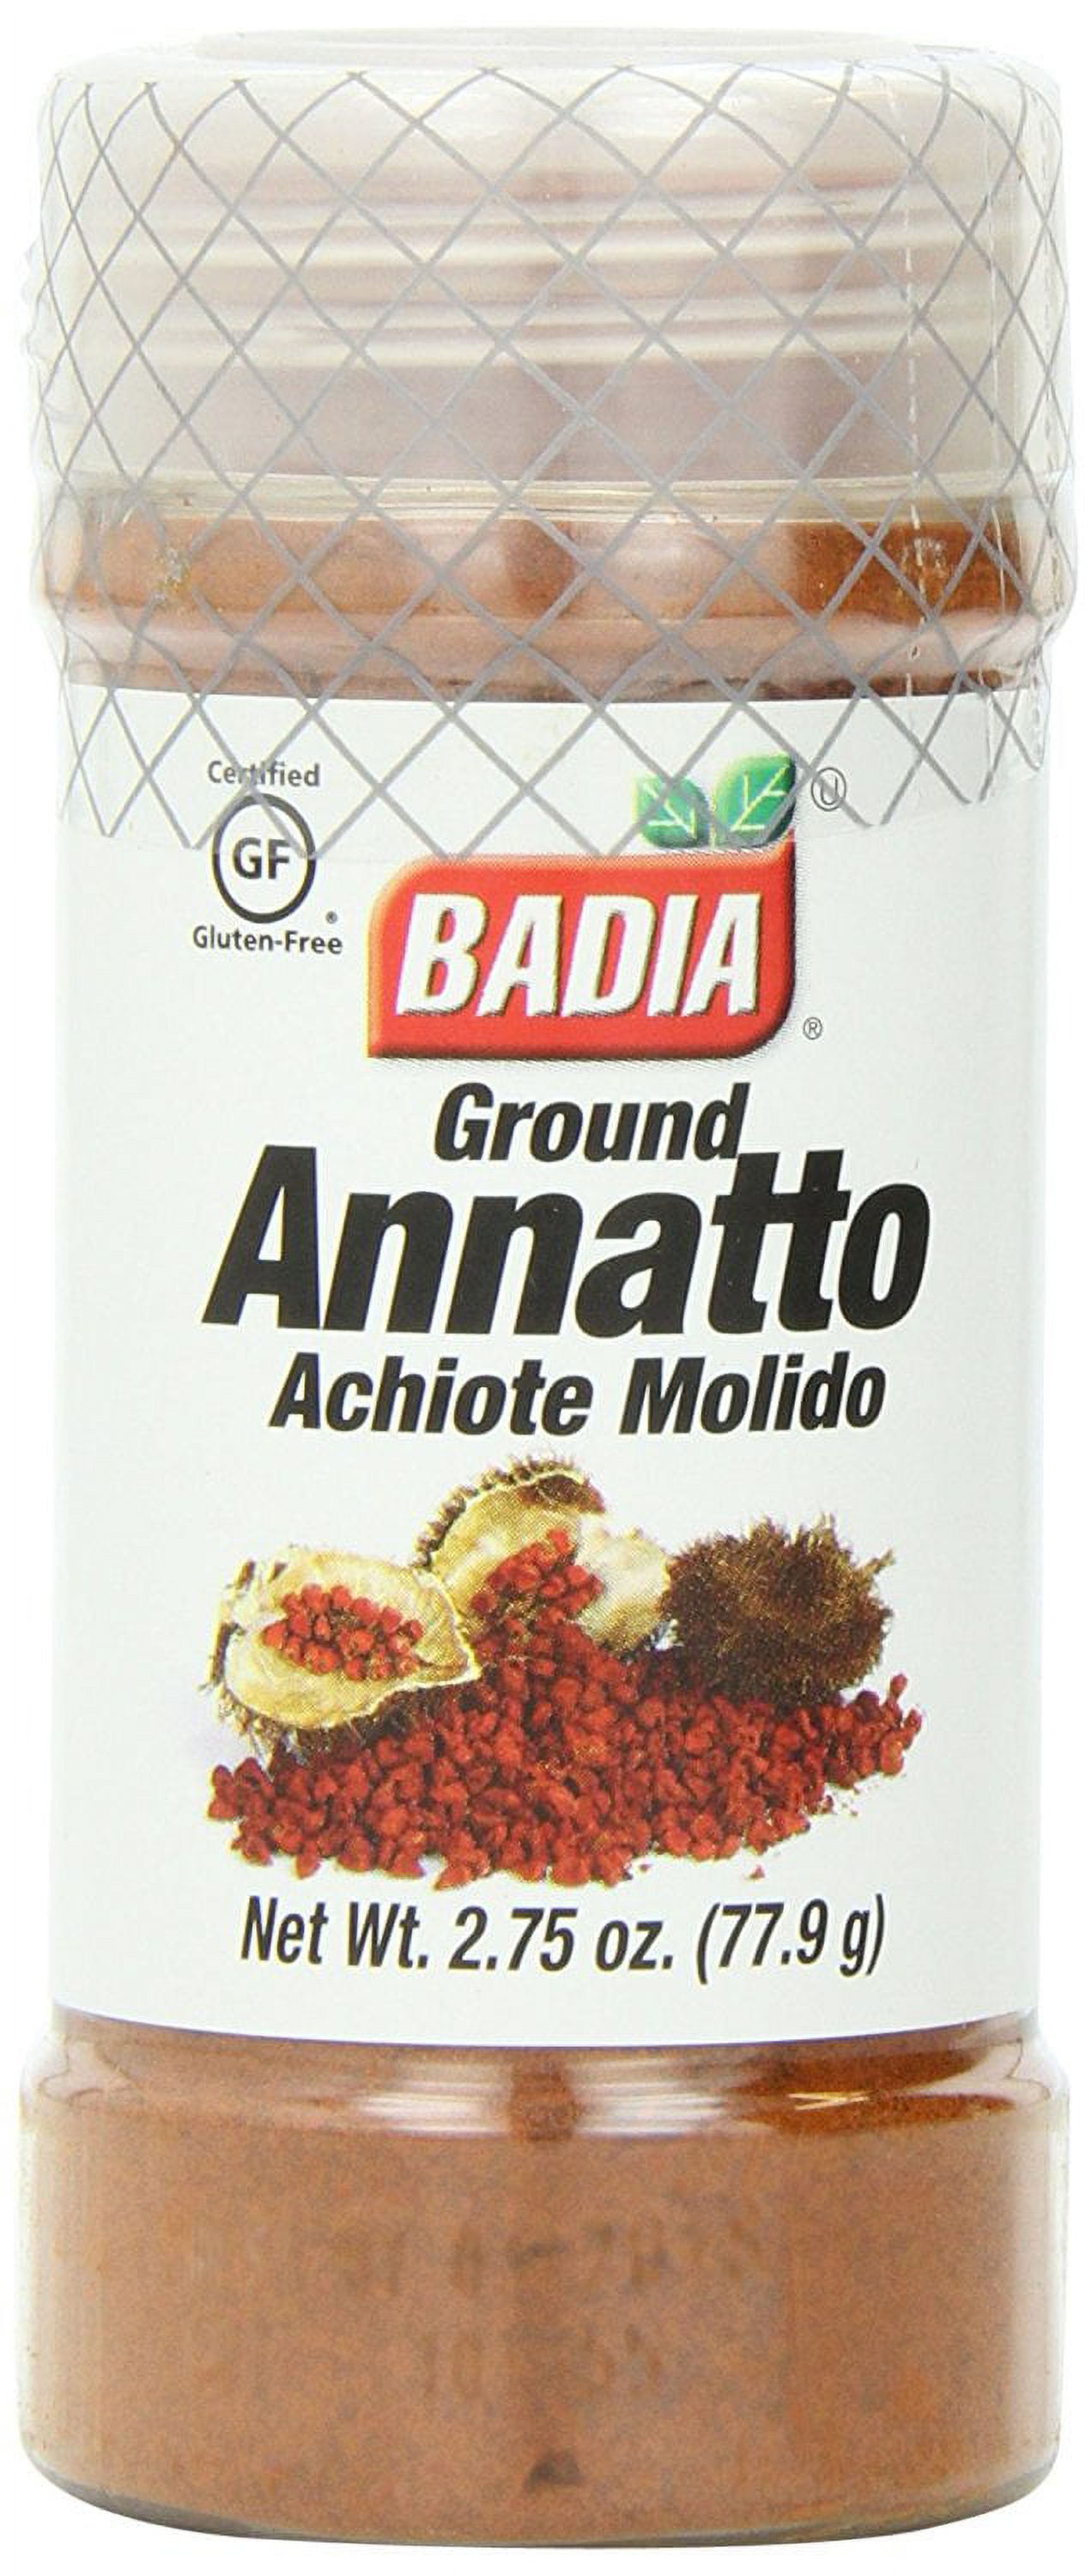 Badia Ground Annatto, Achiote Molido, 2.75 oz - image 3 of 6